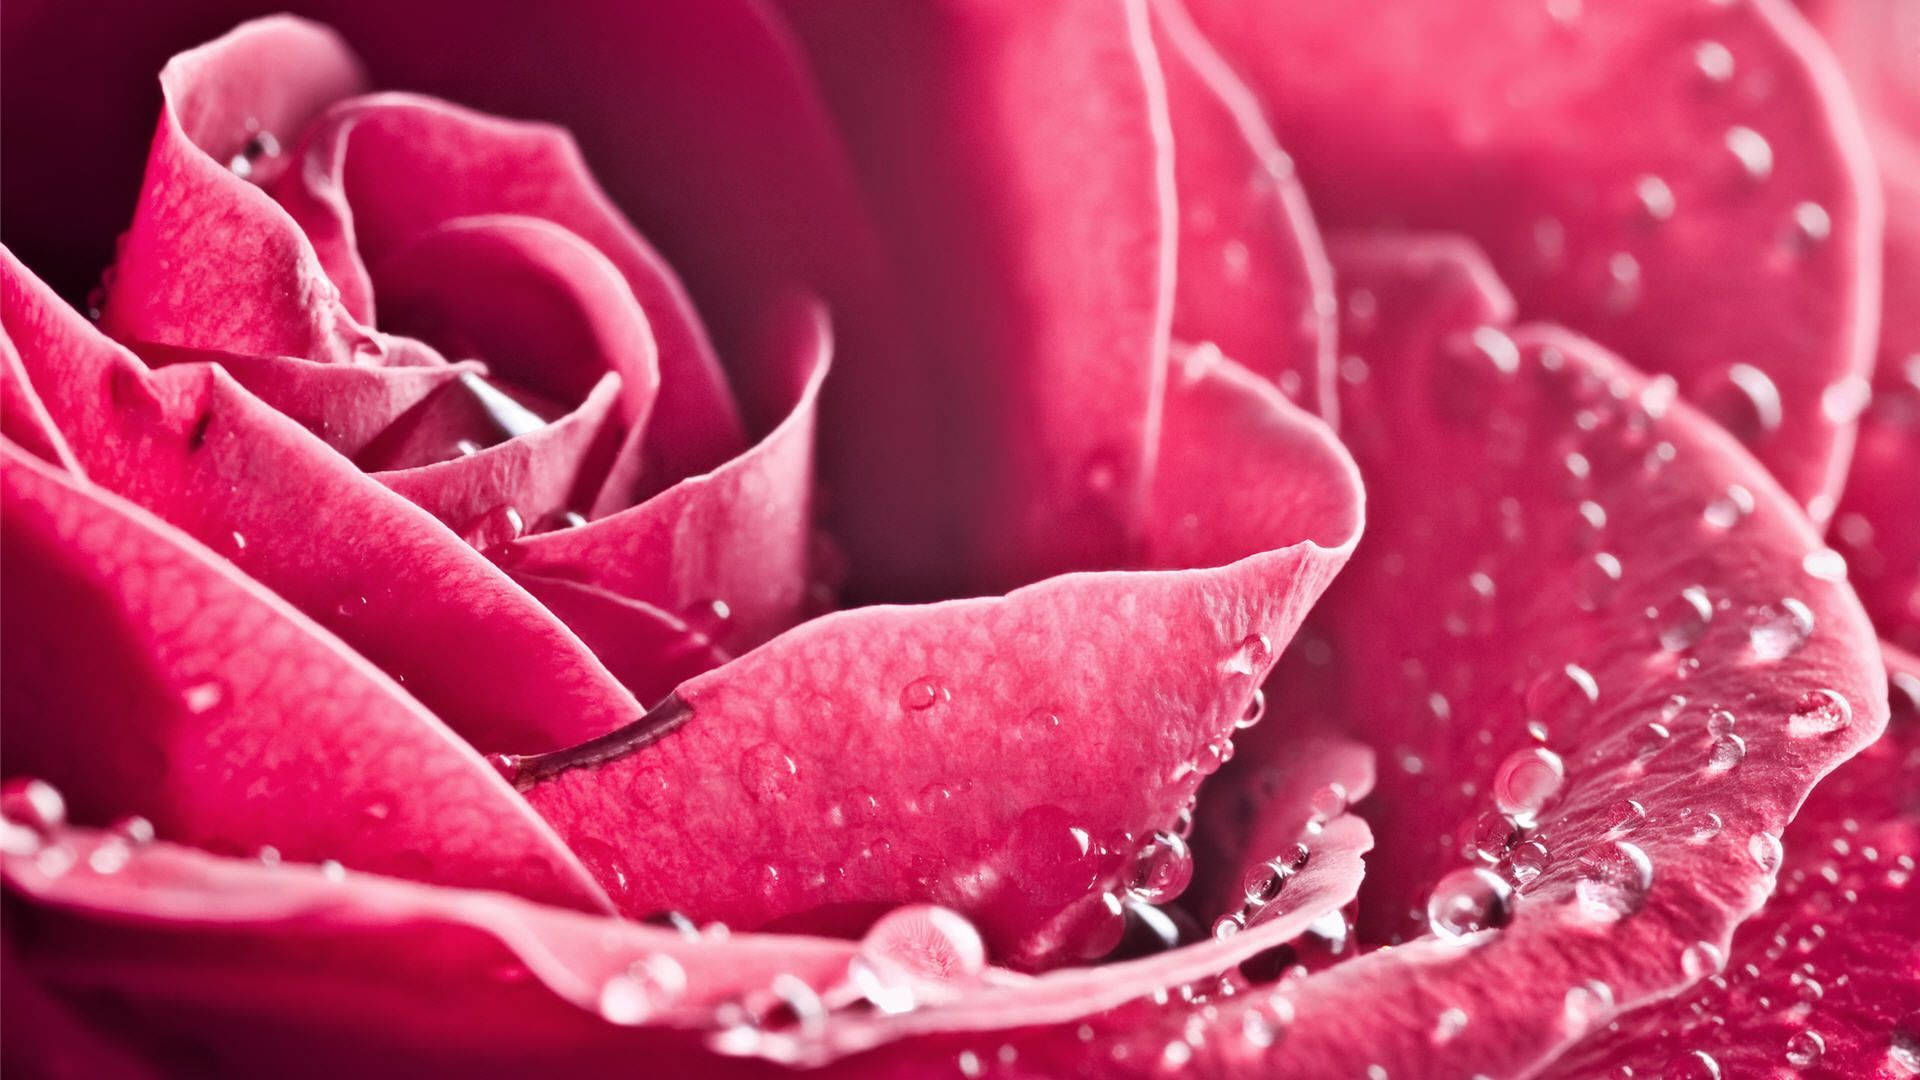 Vibrant Hot Pink Rose Bathed in Droplets Wallpaper